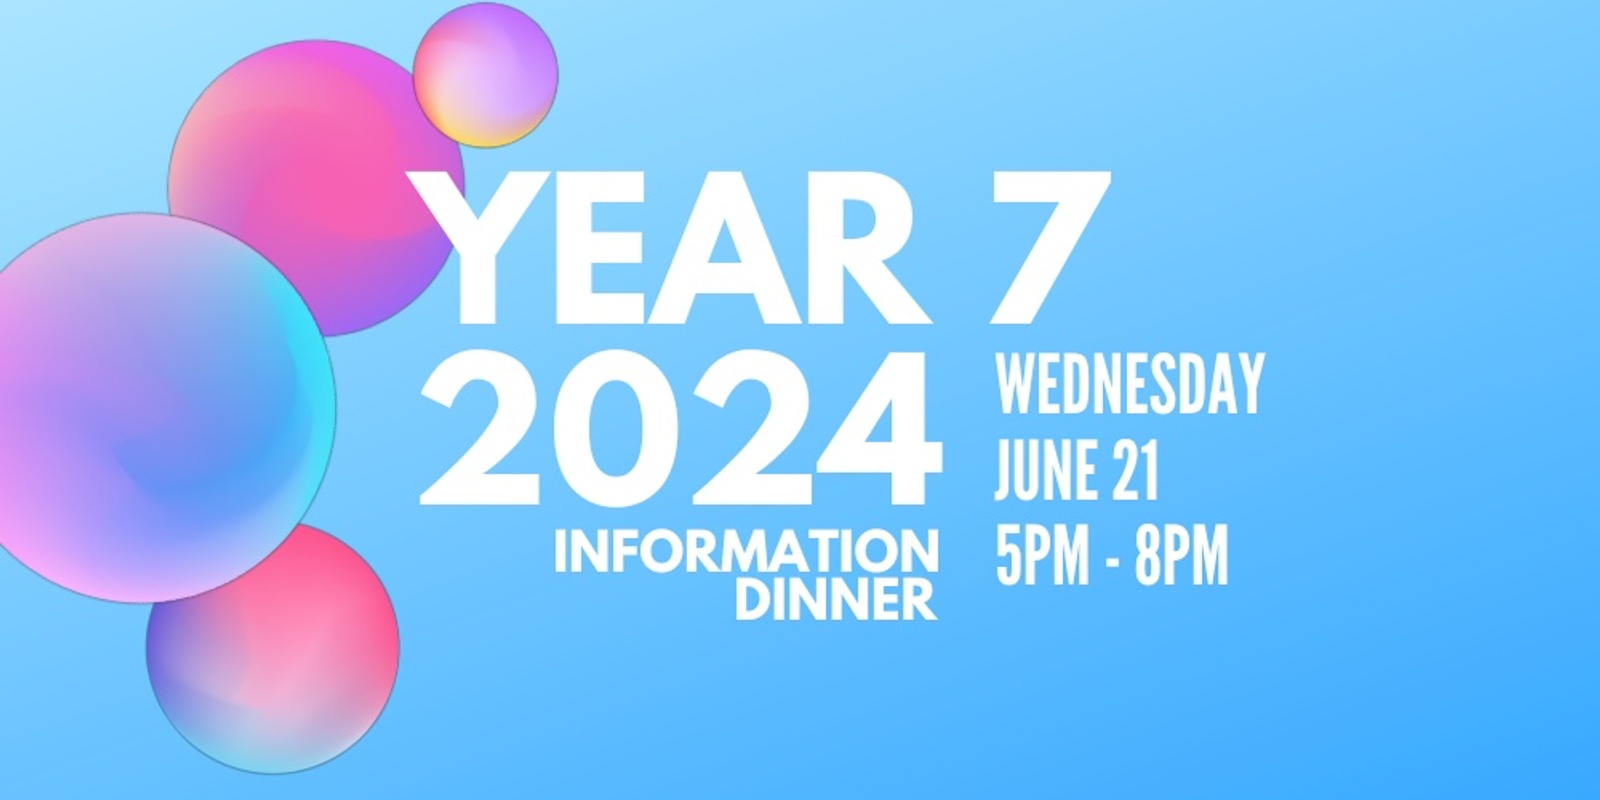 Banner image for YEAR 7 INFORMATION DINNER